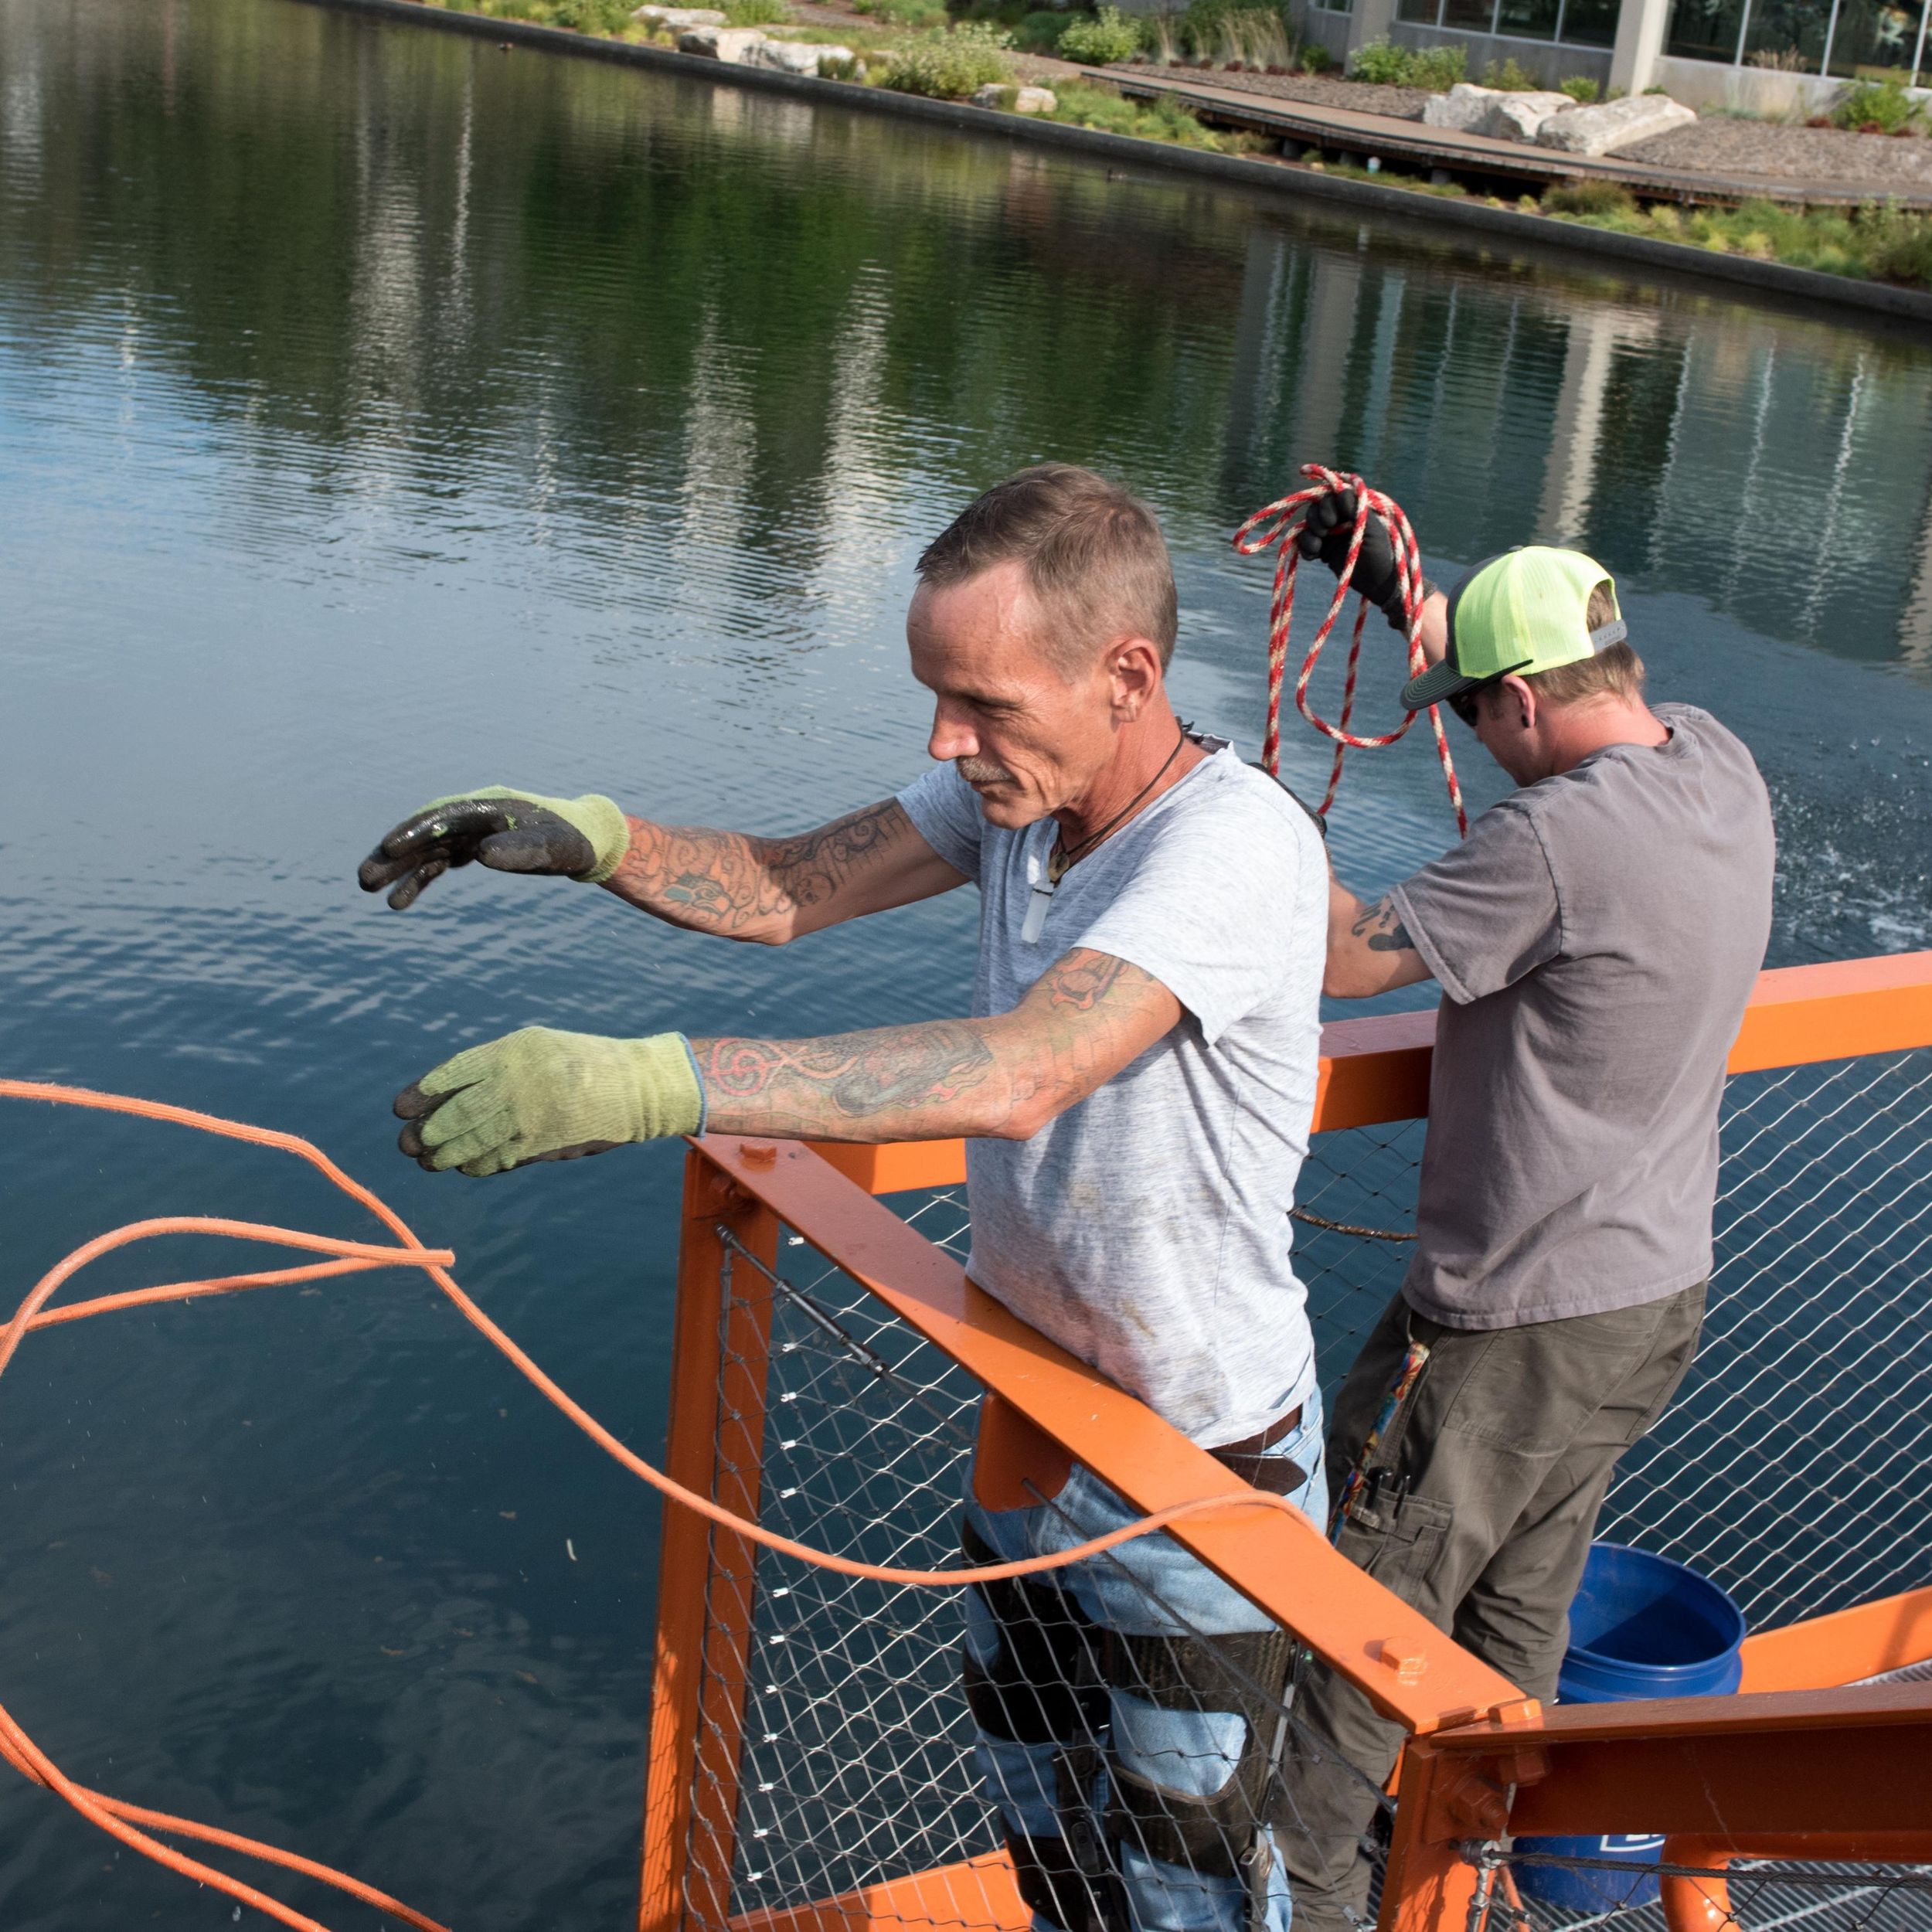 Popularity of magnet fishing grows in Spokane despite muddy legal